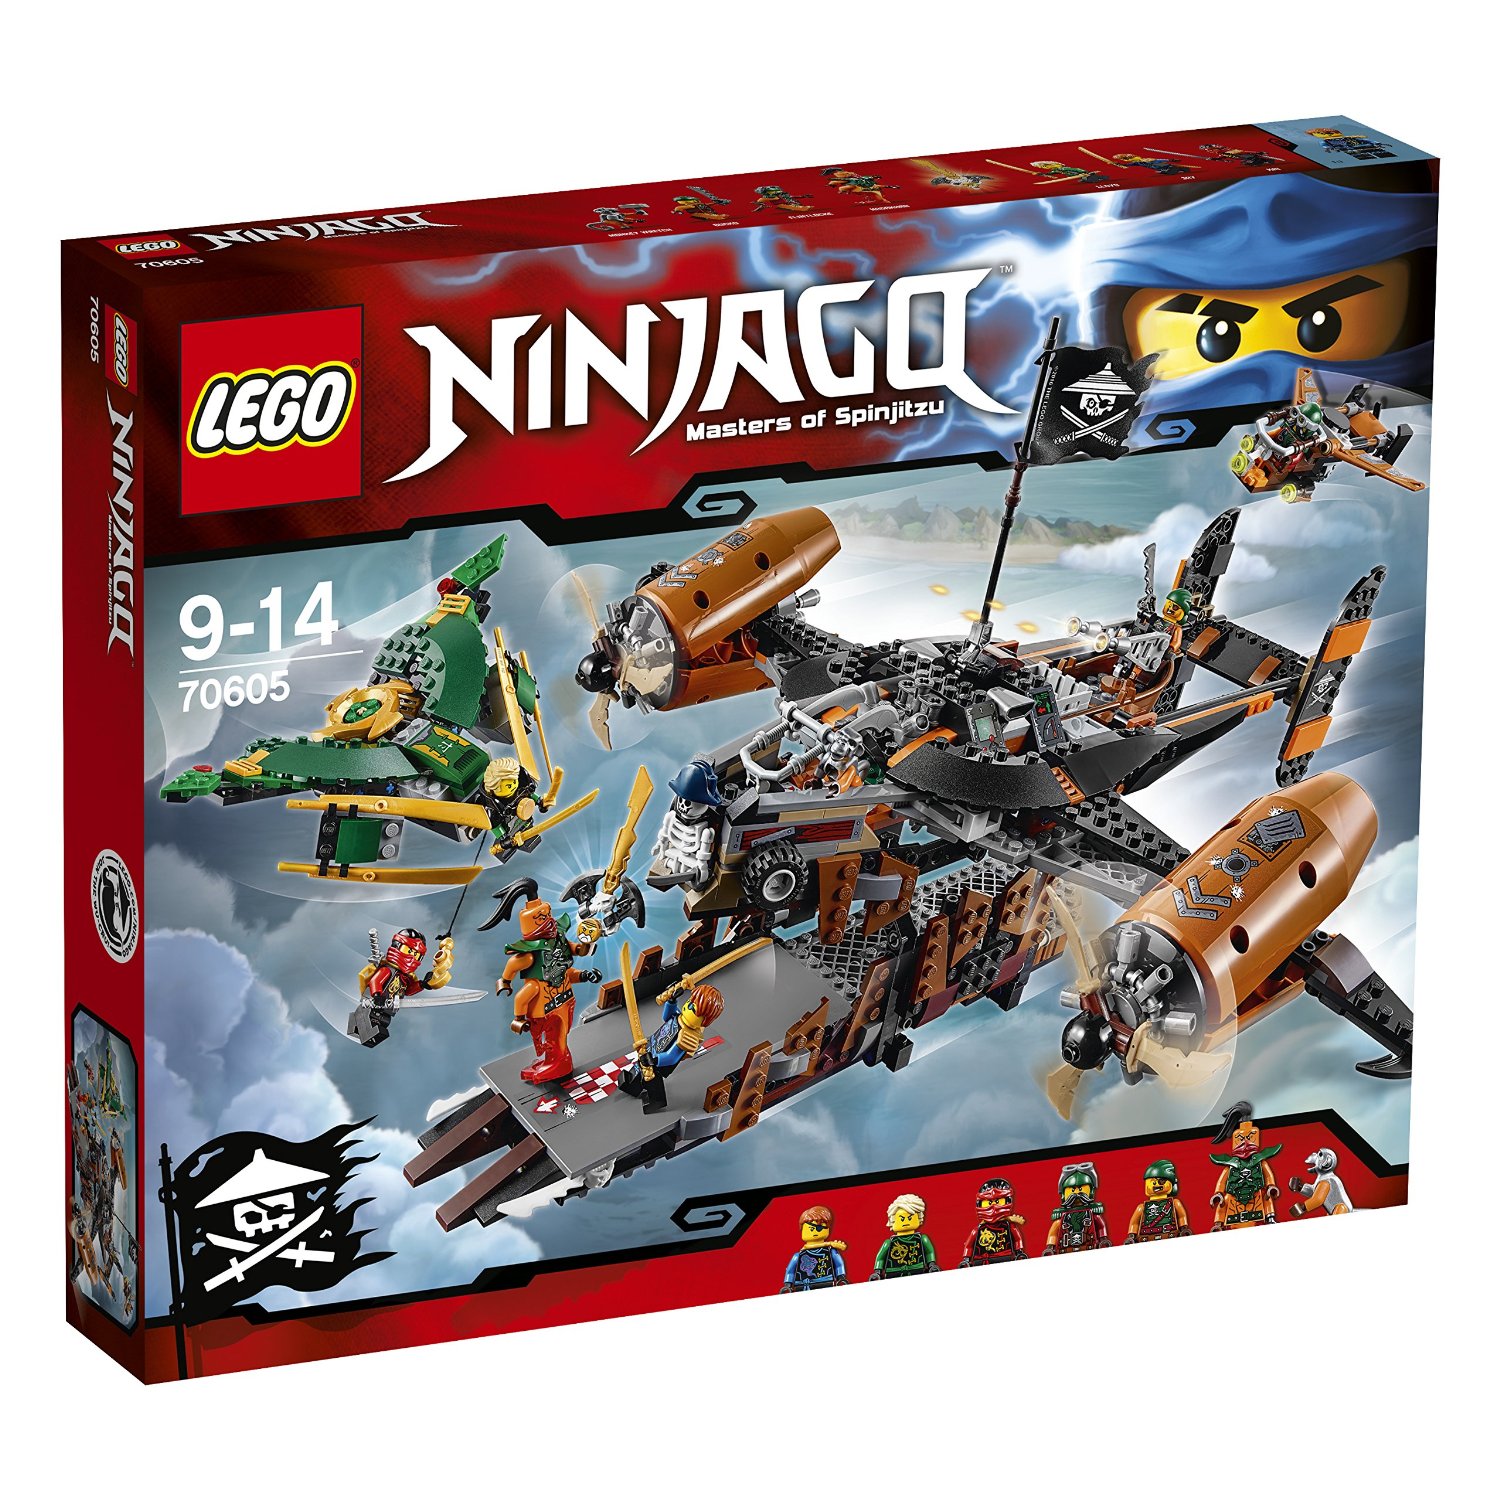 Lego 2016 ninjago Sets and Minifigures - Minifigure Price Guide